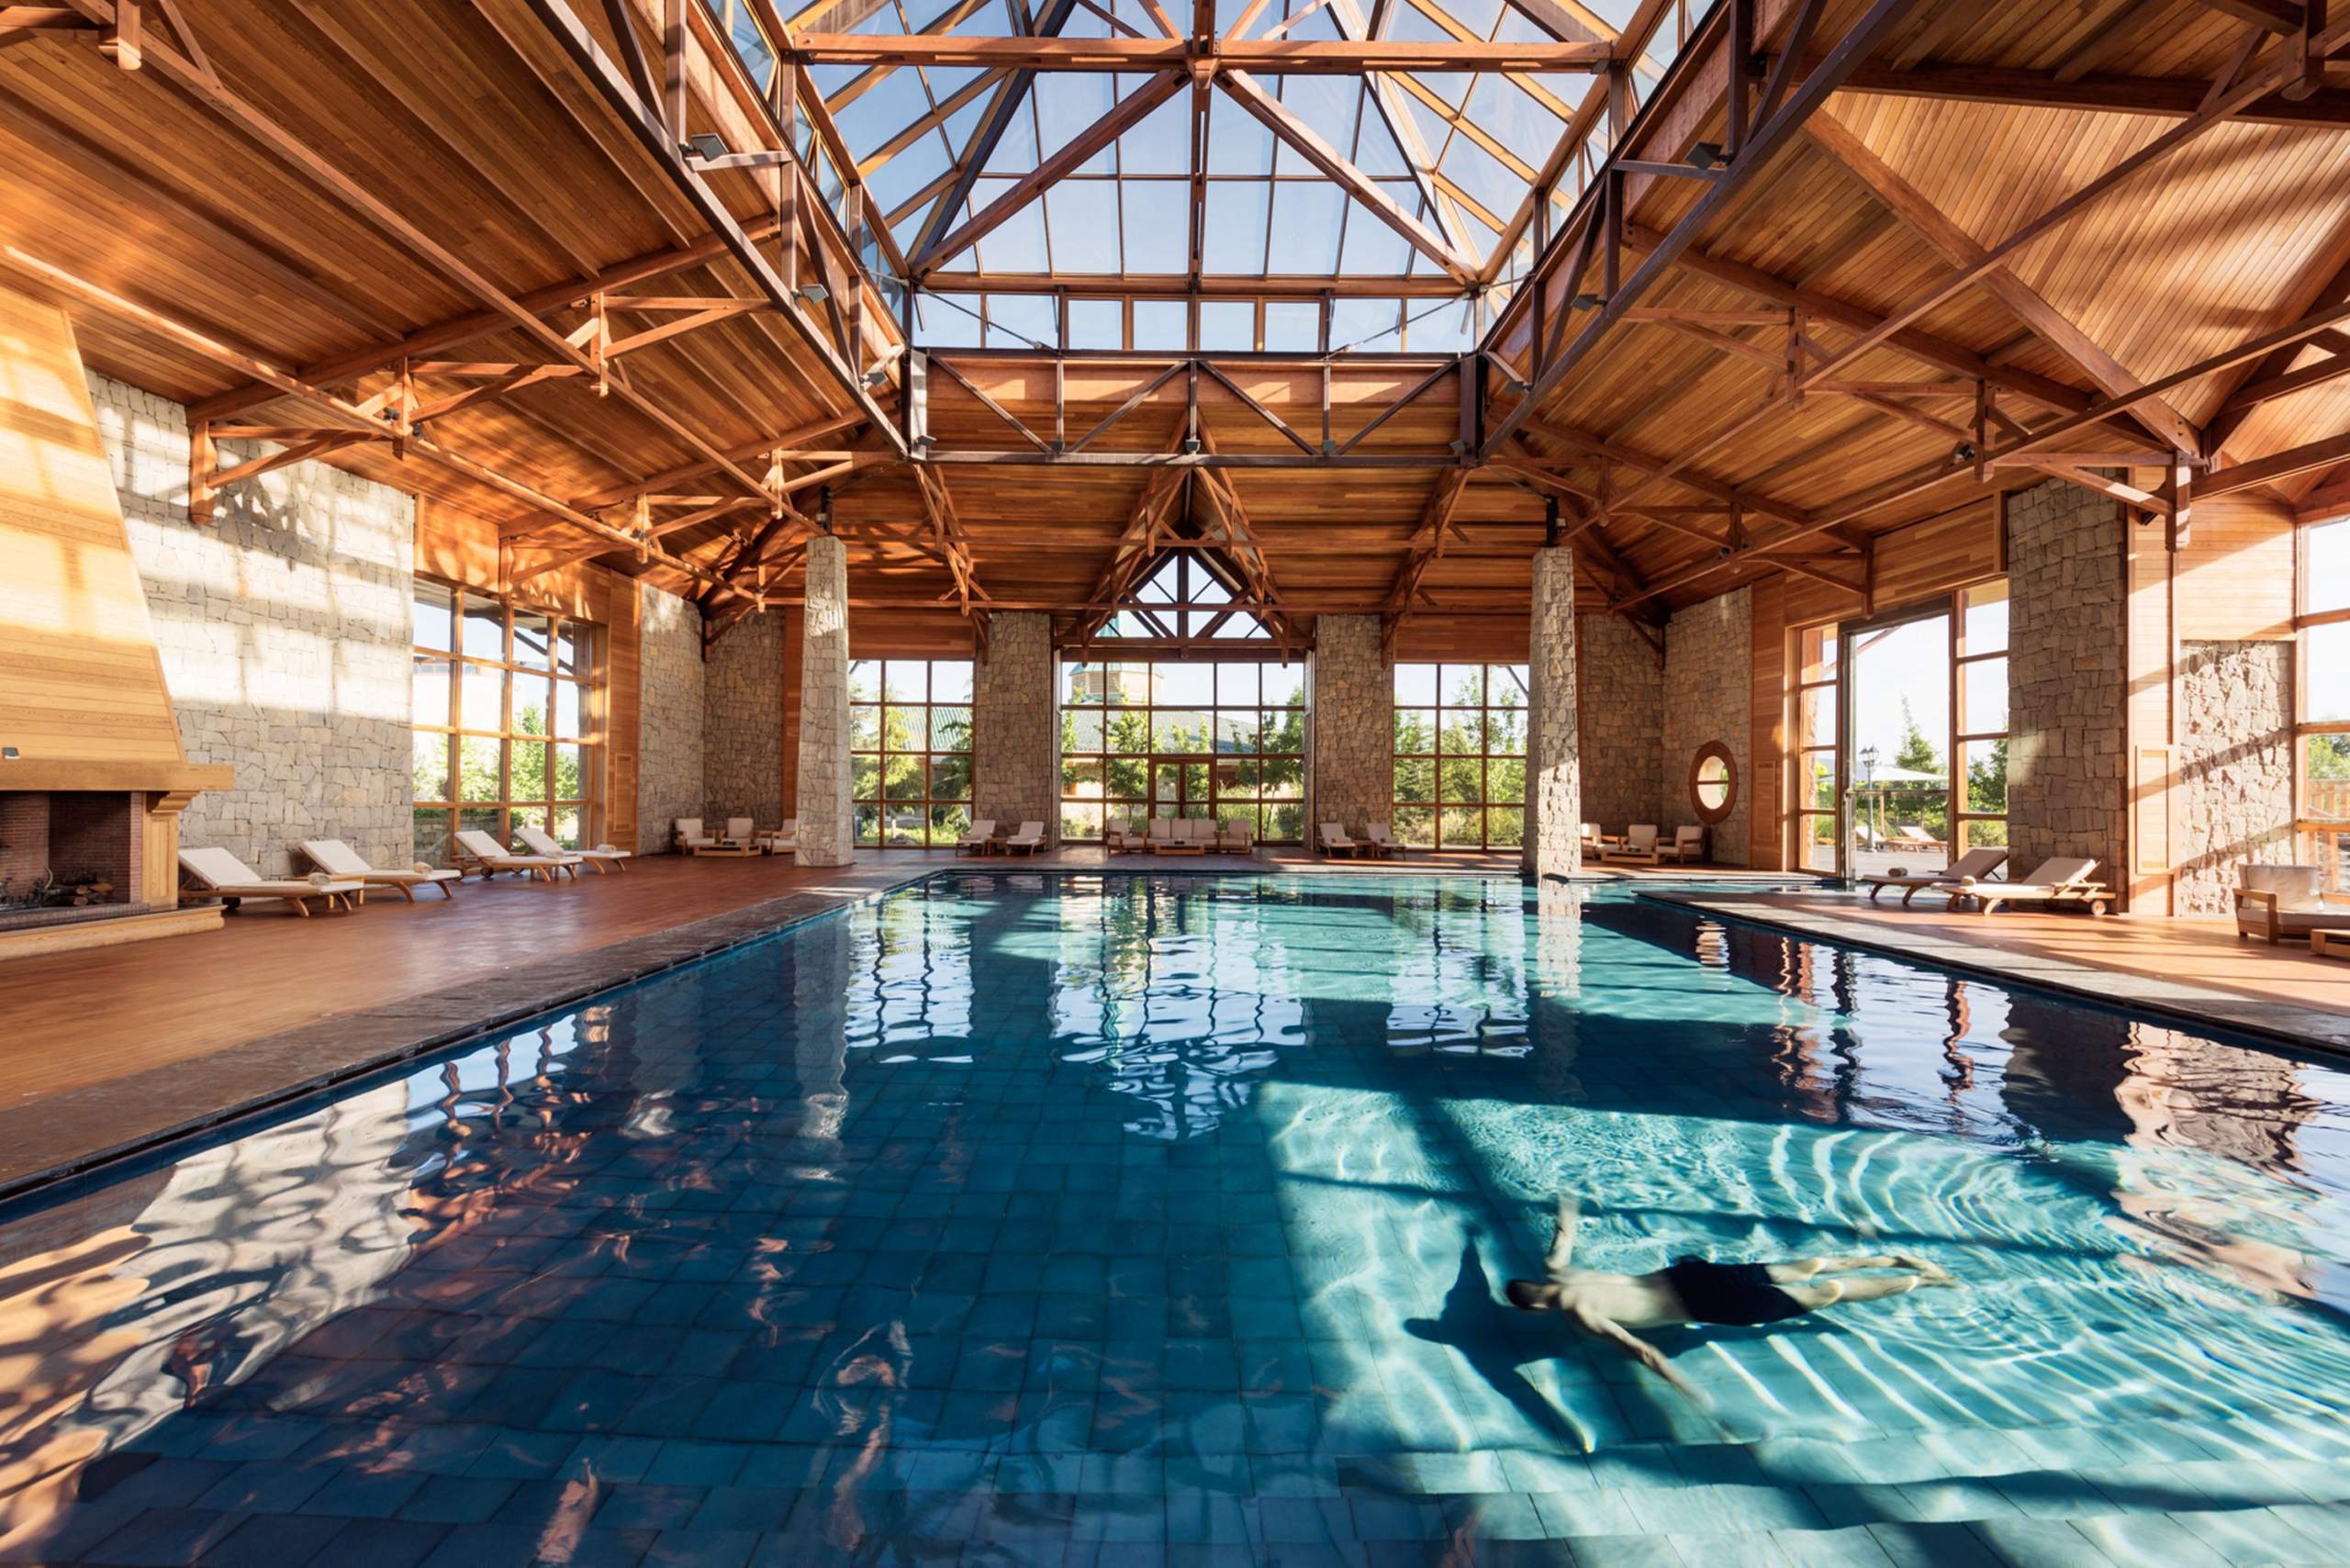 Indoor pool in wooden conservatory